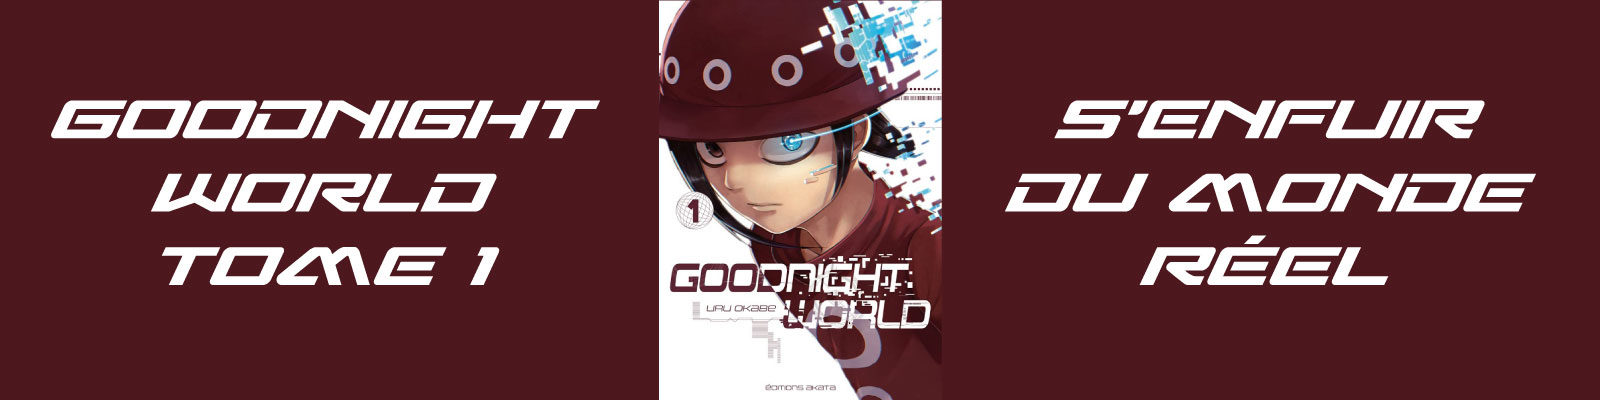 Goodnight World-Vol.-1-2